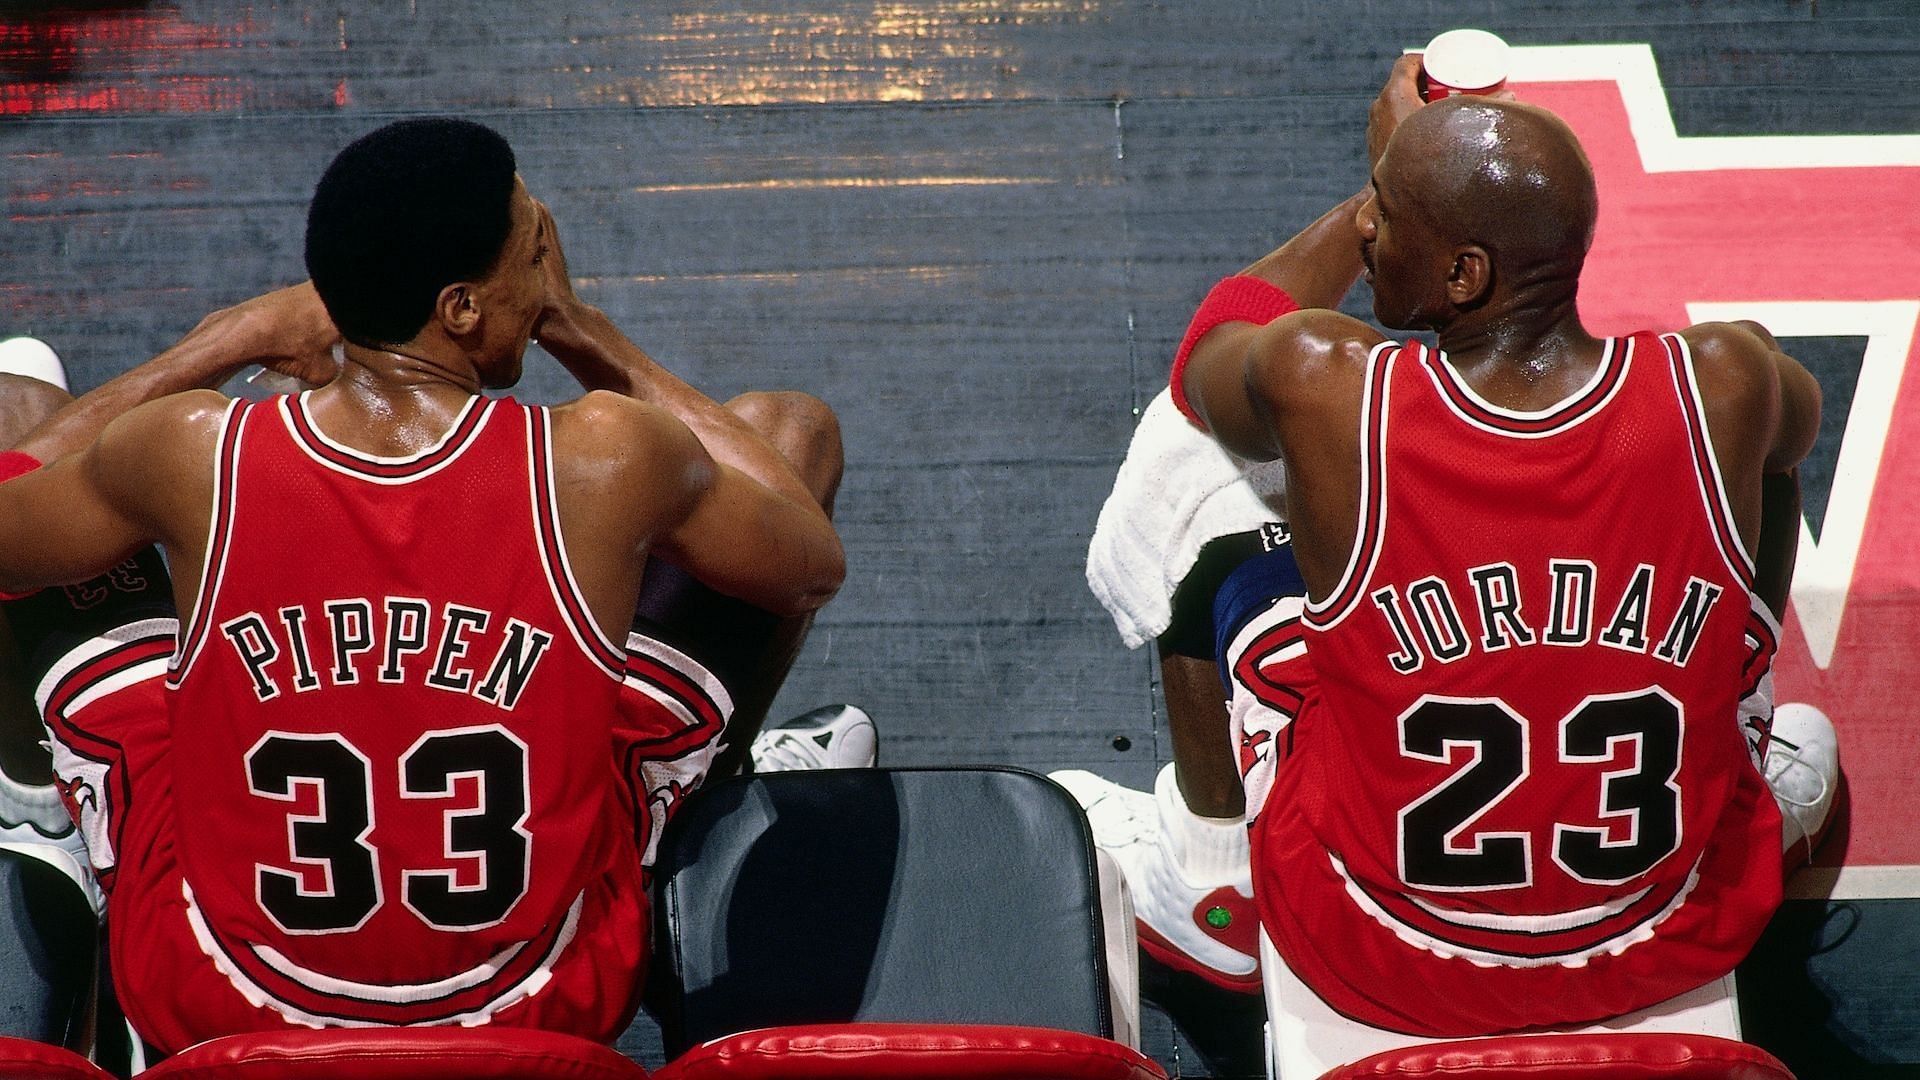 Scottie Pippen and Michael Jordan. (Photo: Courtesy of NBA.com)